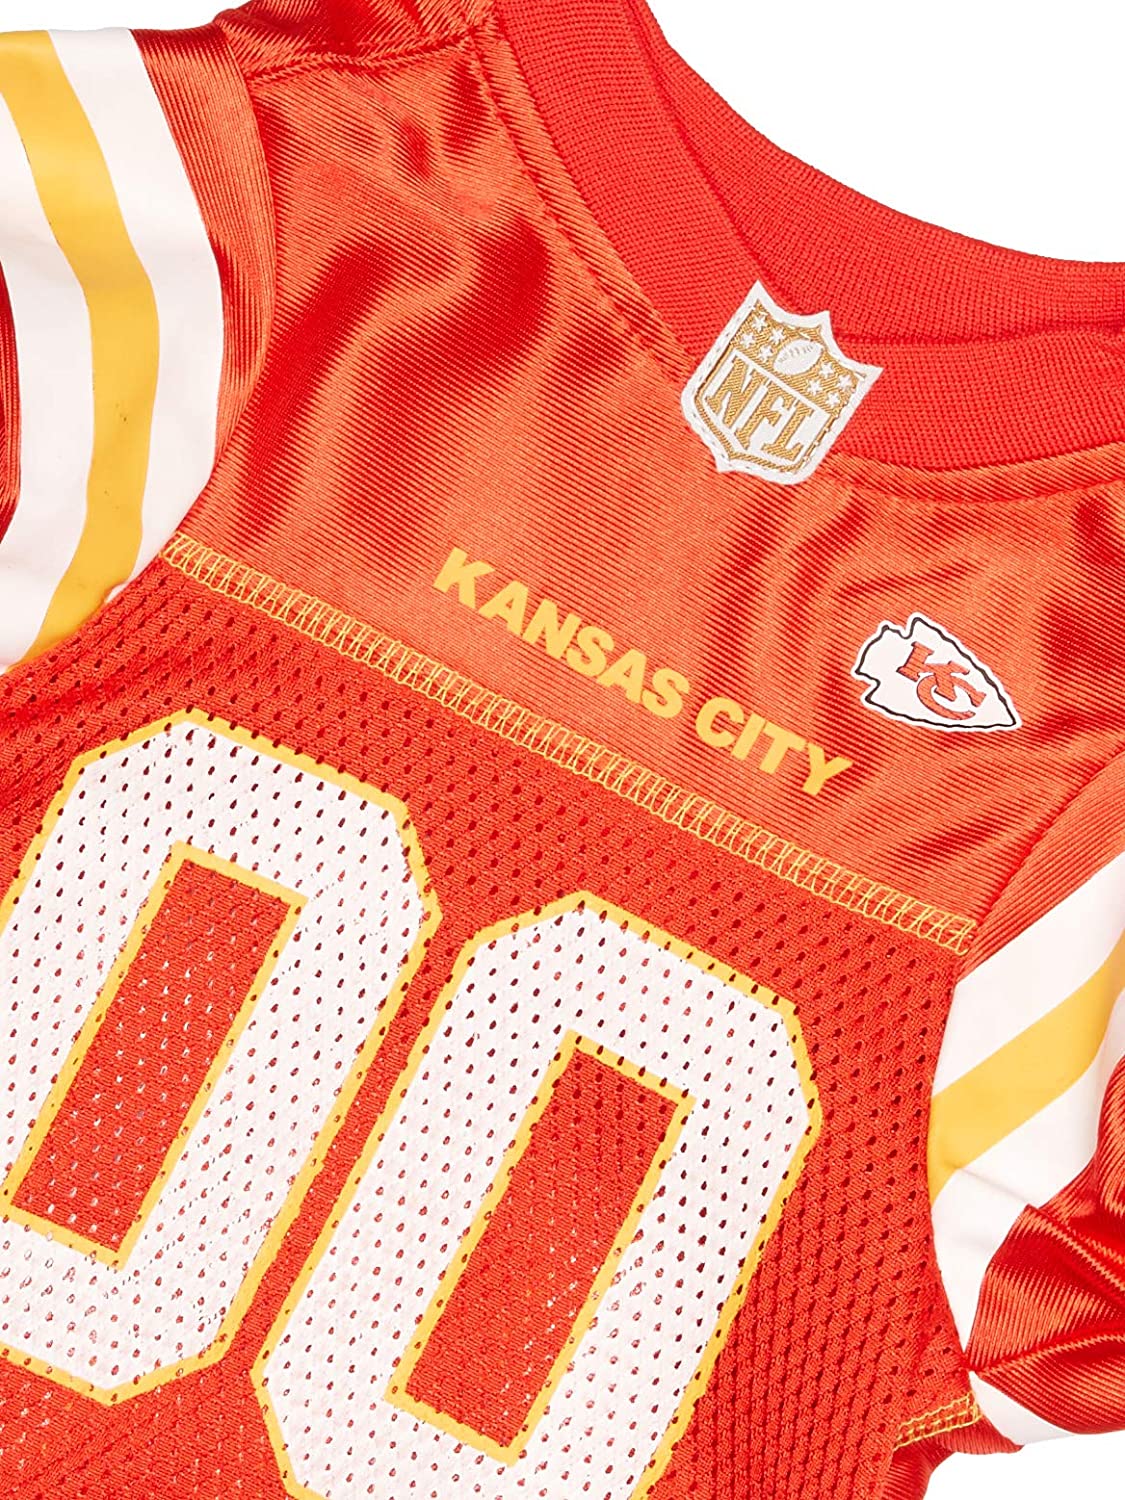 Kansas City Chiefs Cat Jersey – 3 Red Rovers